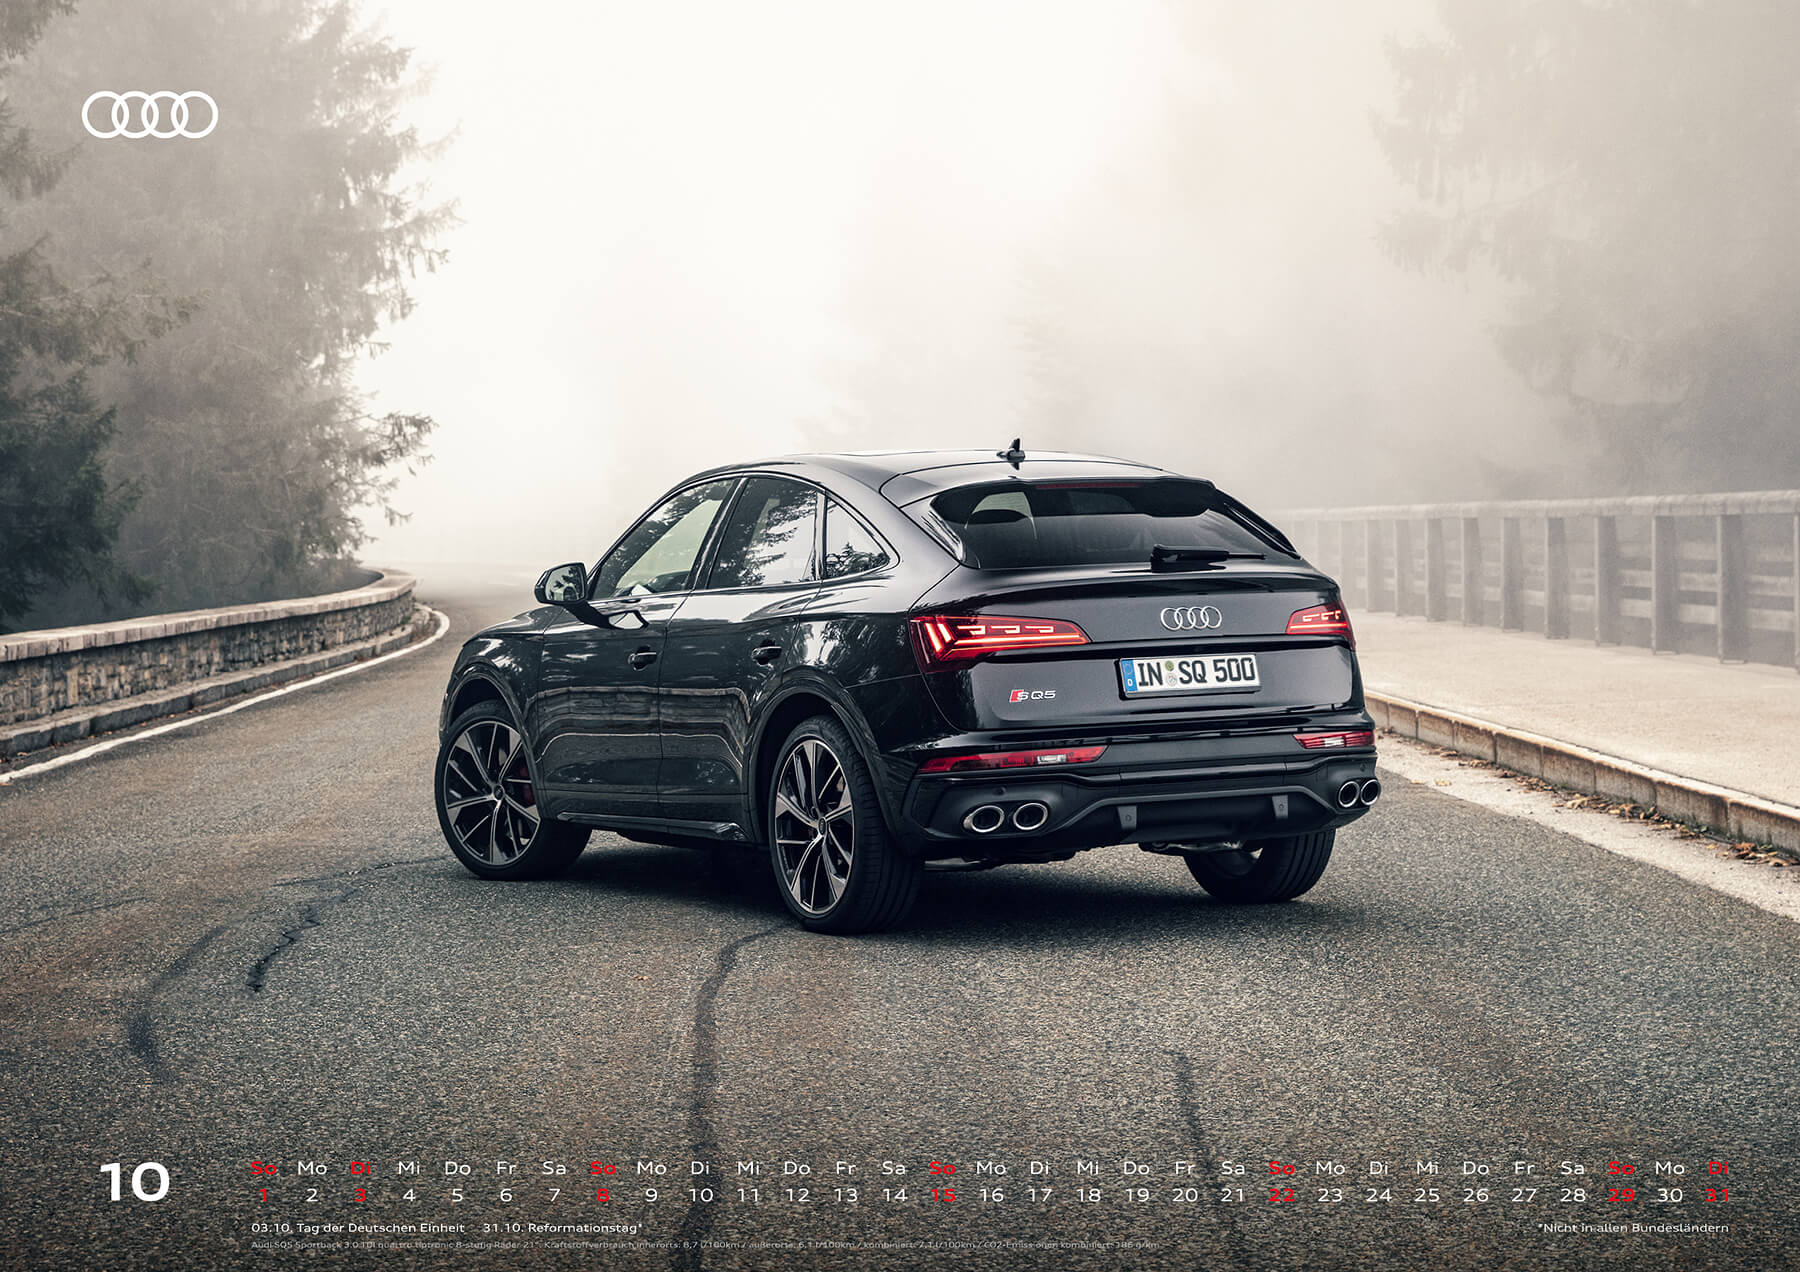 Audi Hintergrundbild 1800x1272. Audi Kalender XXL. Officially licensed